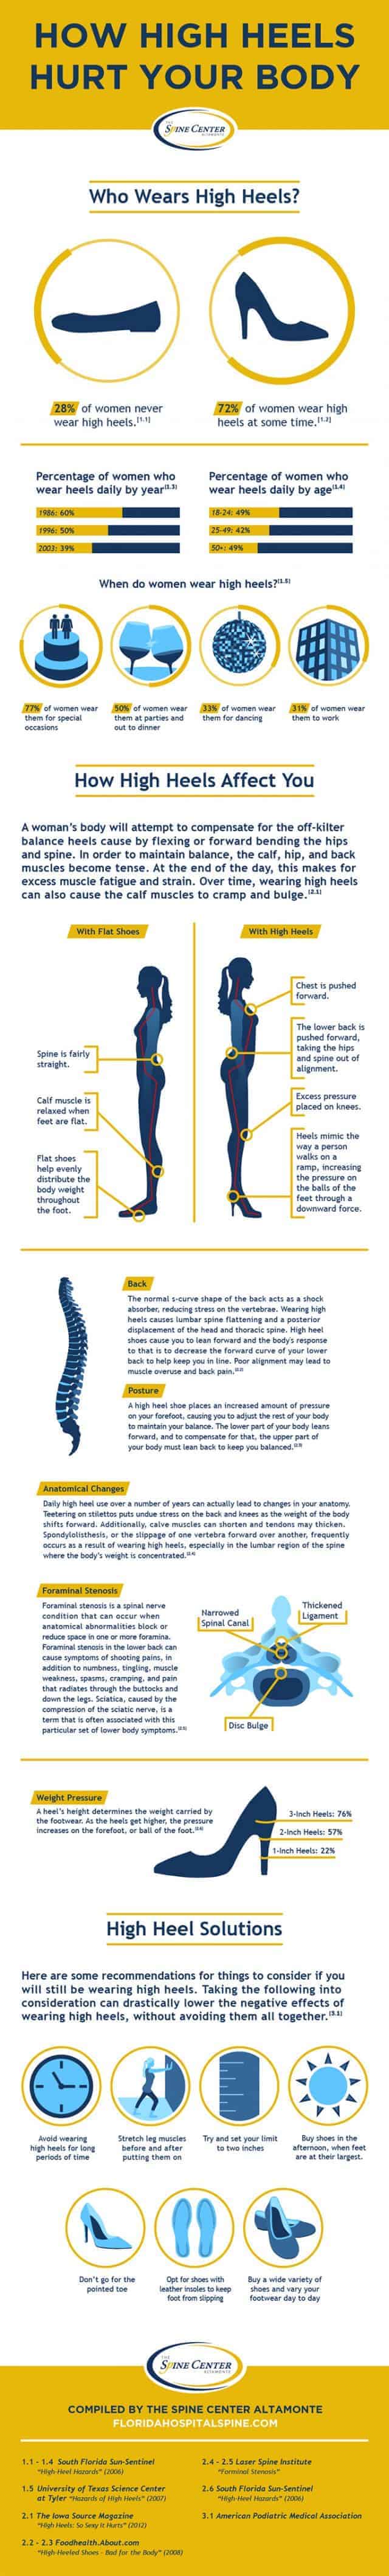 How high heels hurt your body infographic